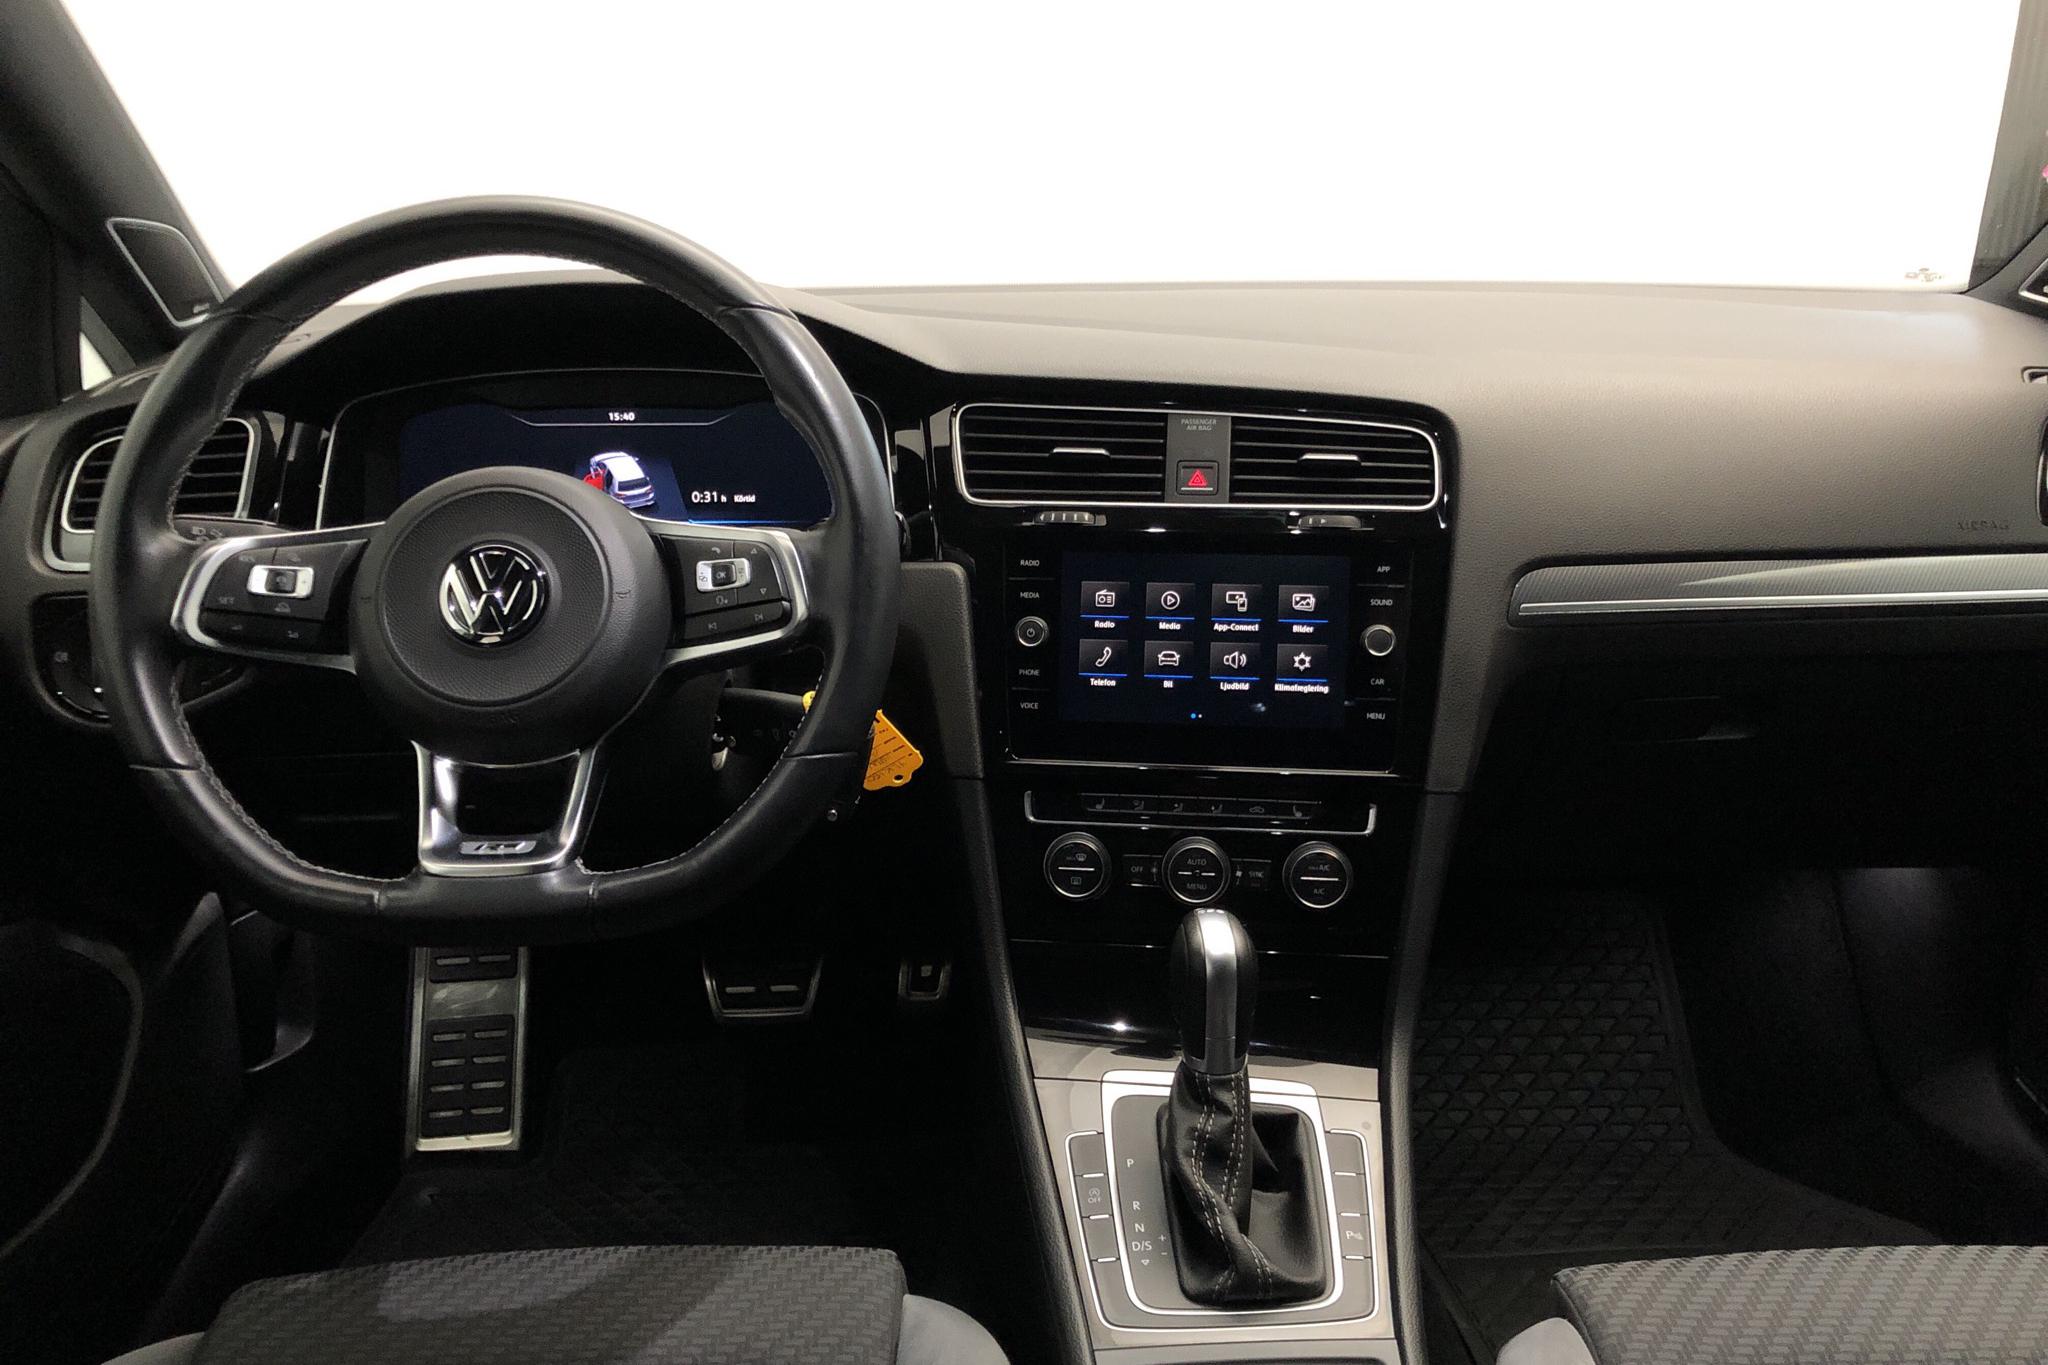 VW Golf VII 1.4 TSI 5dr (150hk) - 39 310 km - Automatic - Dark Grey - 2018